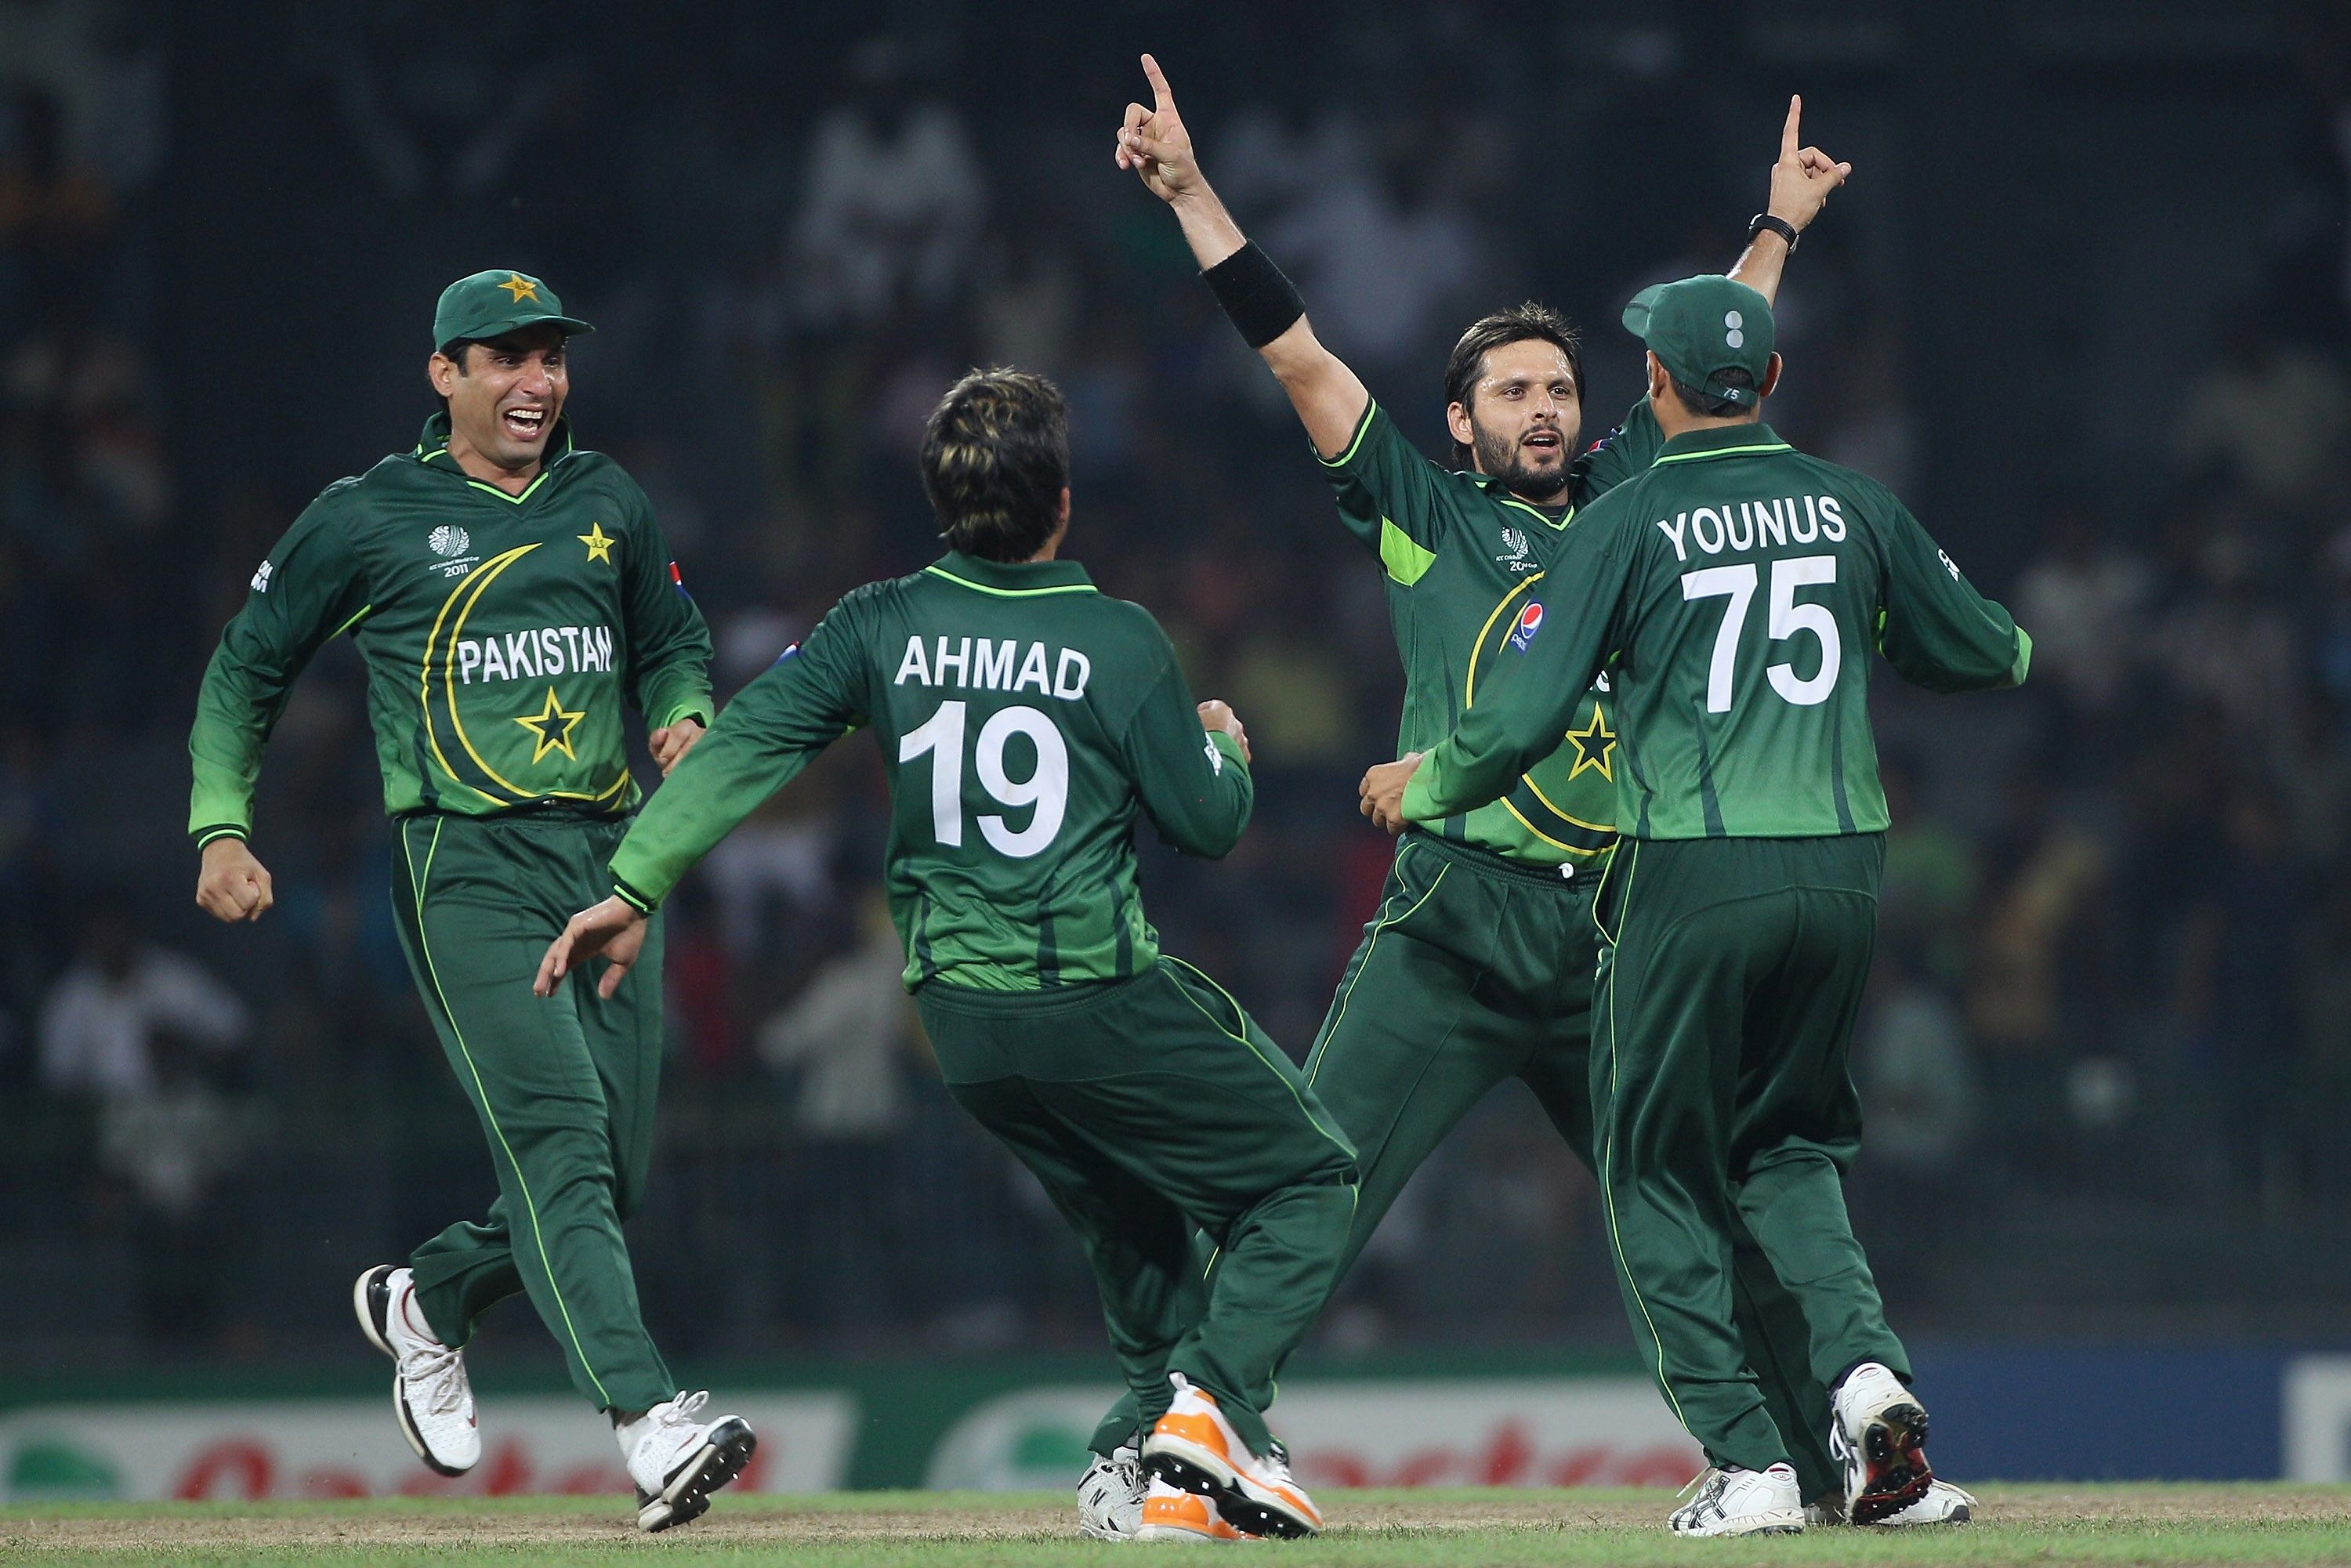 Shahid Afridi and other Pakistani Cricketer Celebrates after Take 919 - Shahid Afridi Wallpaper